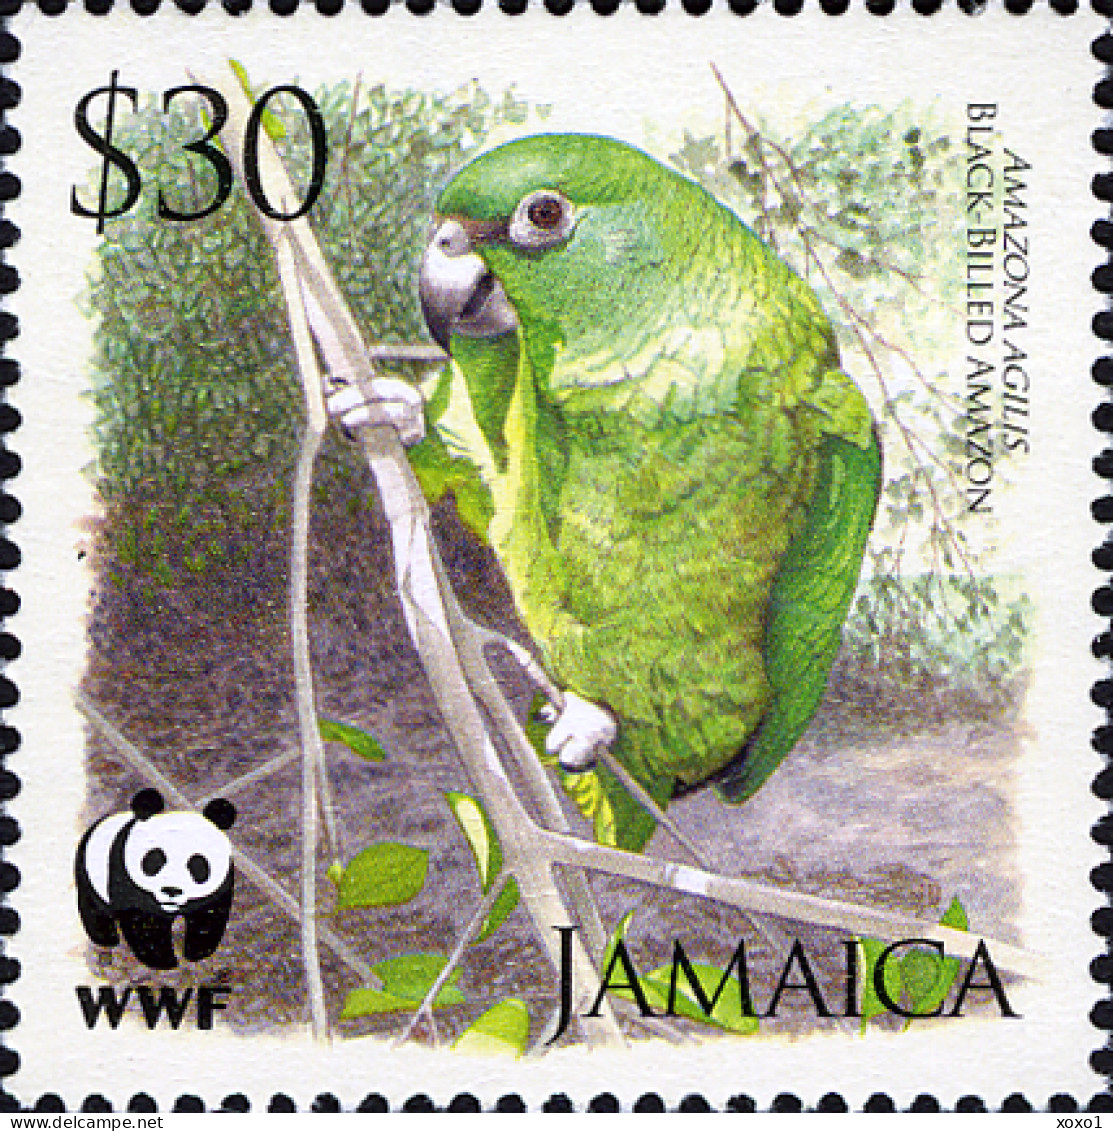 Jamaica 2006 MiNr. 1122 - 1125 Jamaika WWF Birds, Parrots, Black-billed Amazon 4v MNH** 3.20 € - Papegaaien, Parkieten